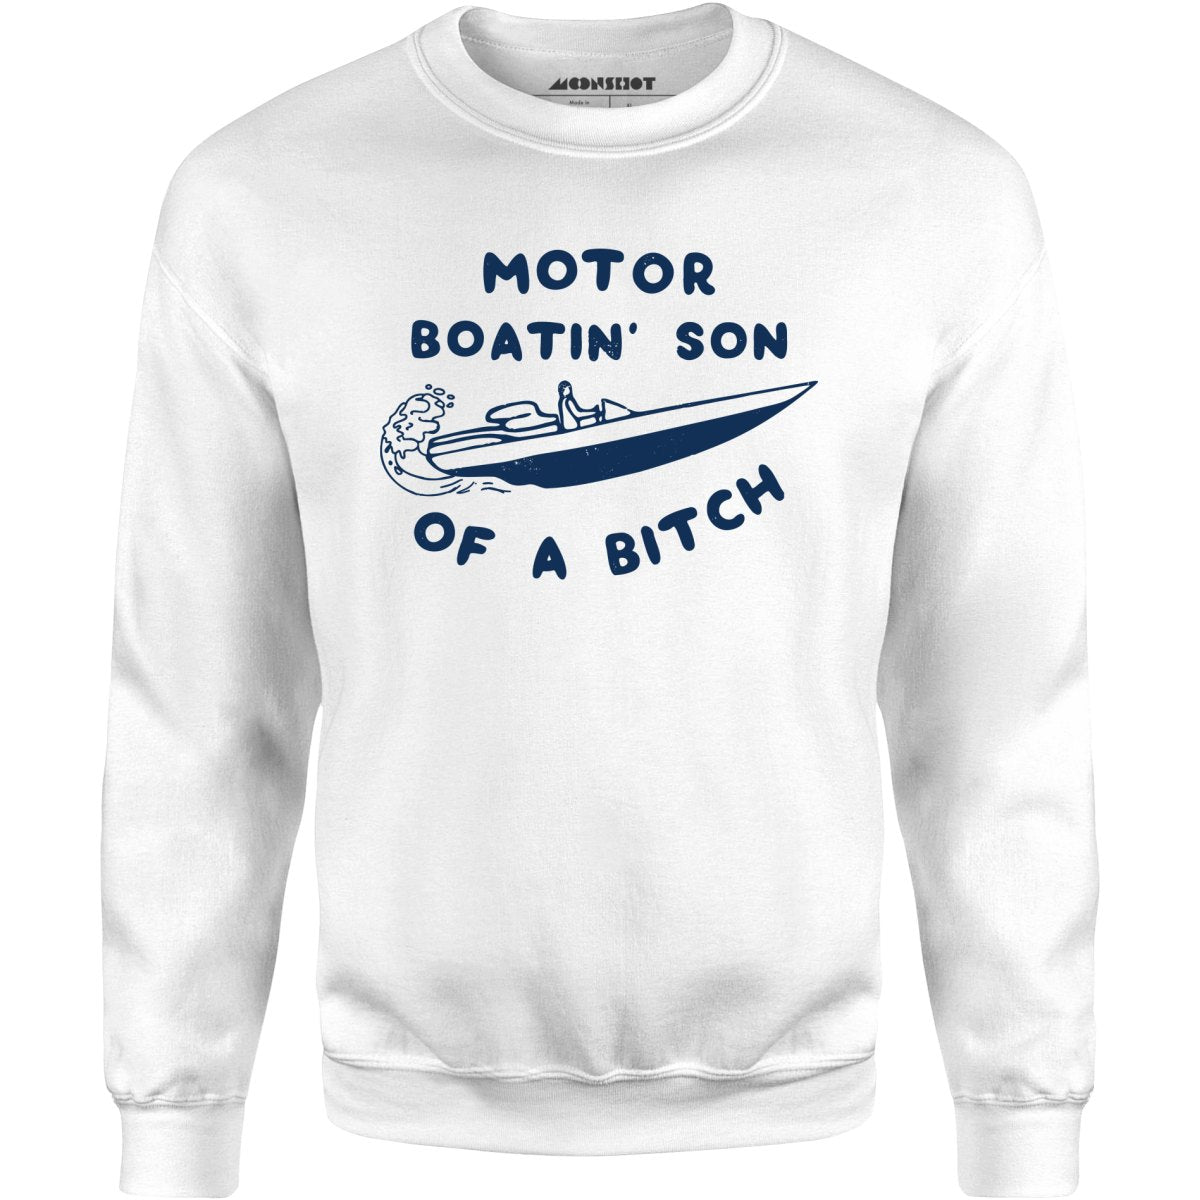 Motor Boatin' Son of a Bitch - Unisex Sweatshirt